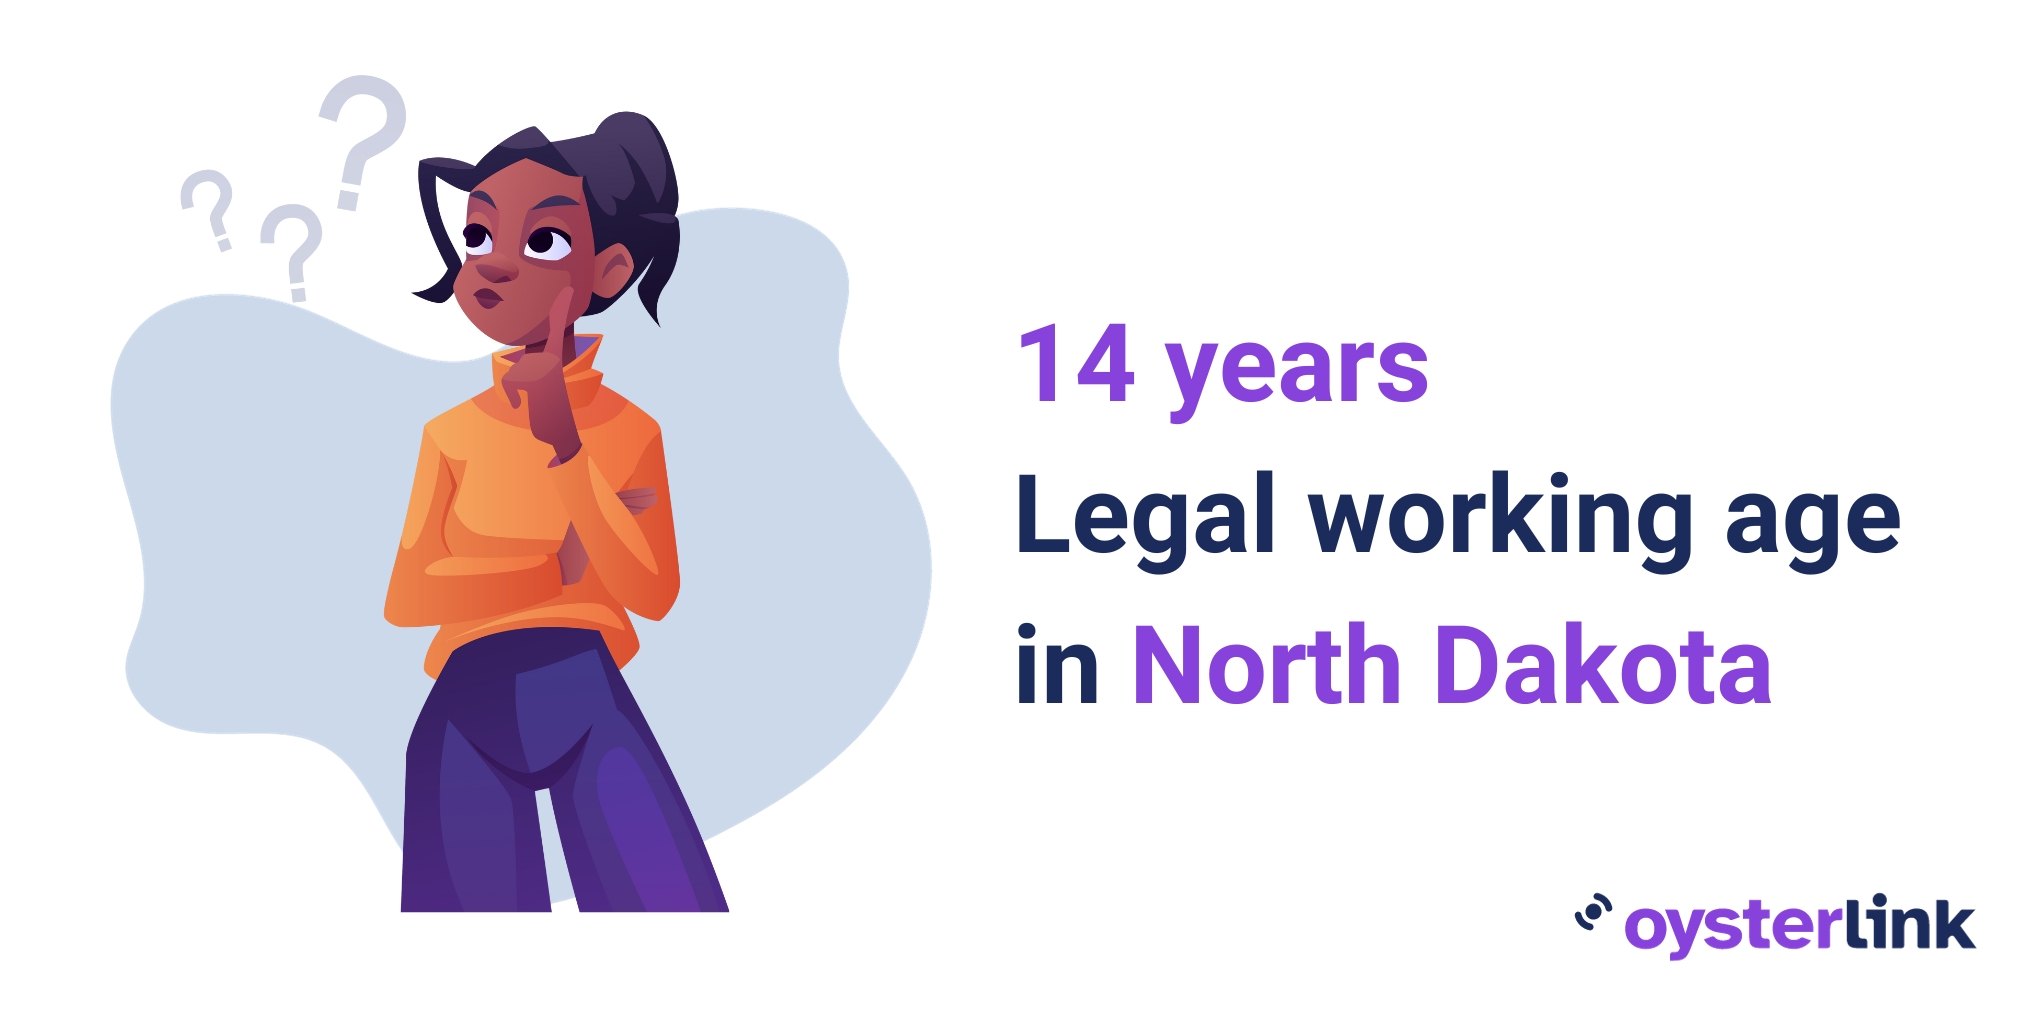 North Dakota's legal working age is 14